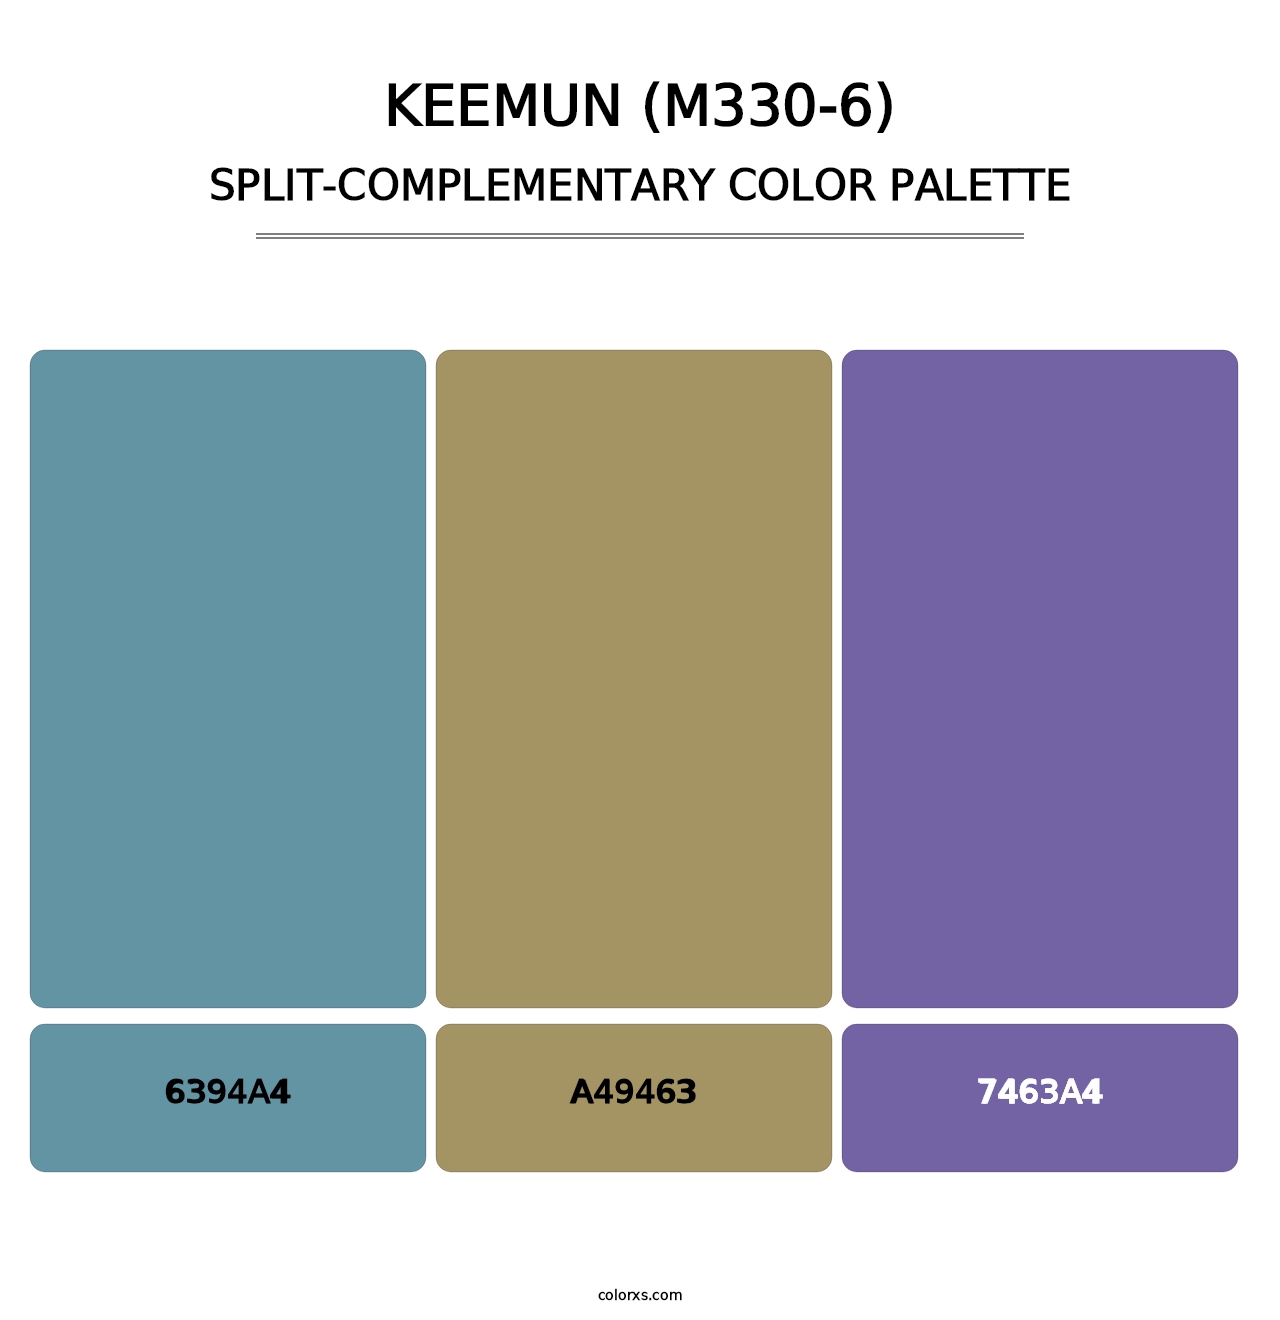 Keemun (M330-6) - Split-Complementary Color Palette